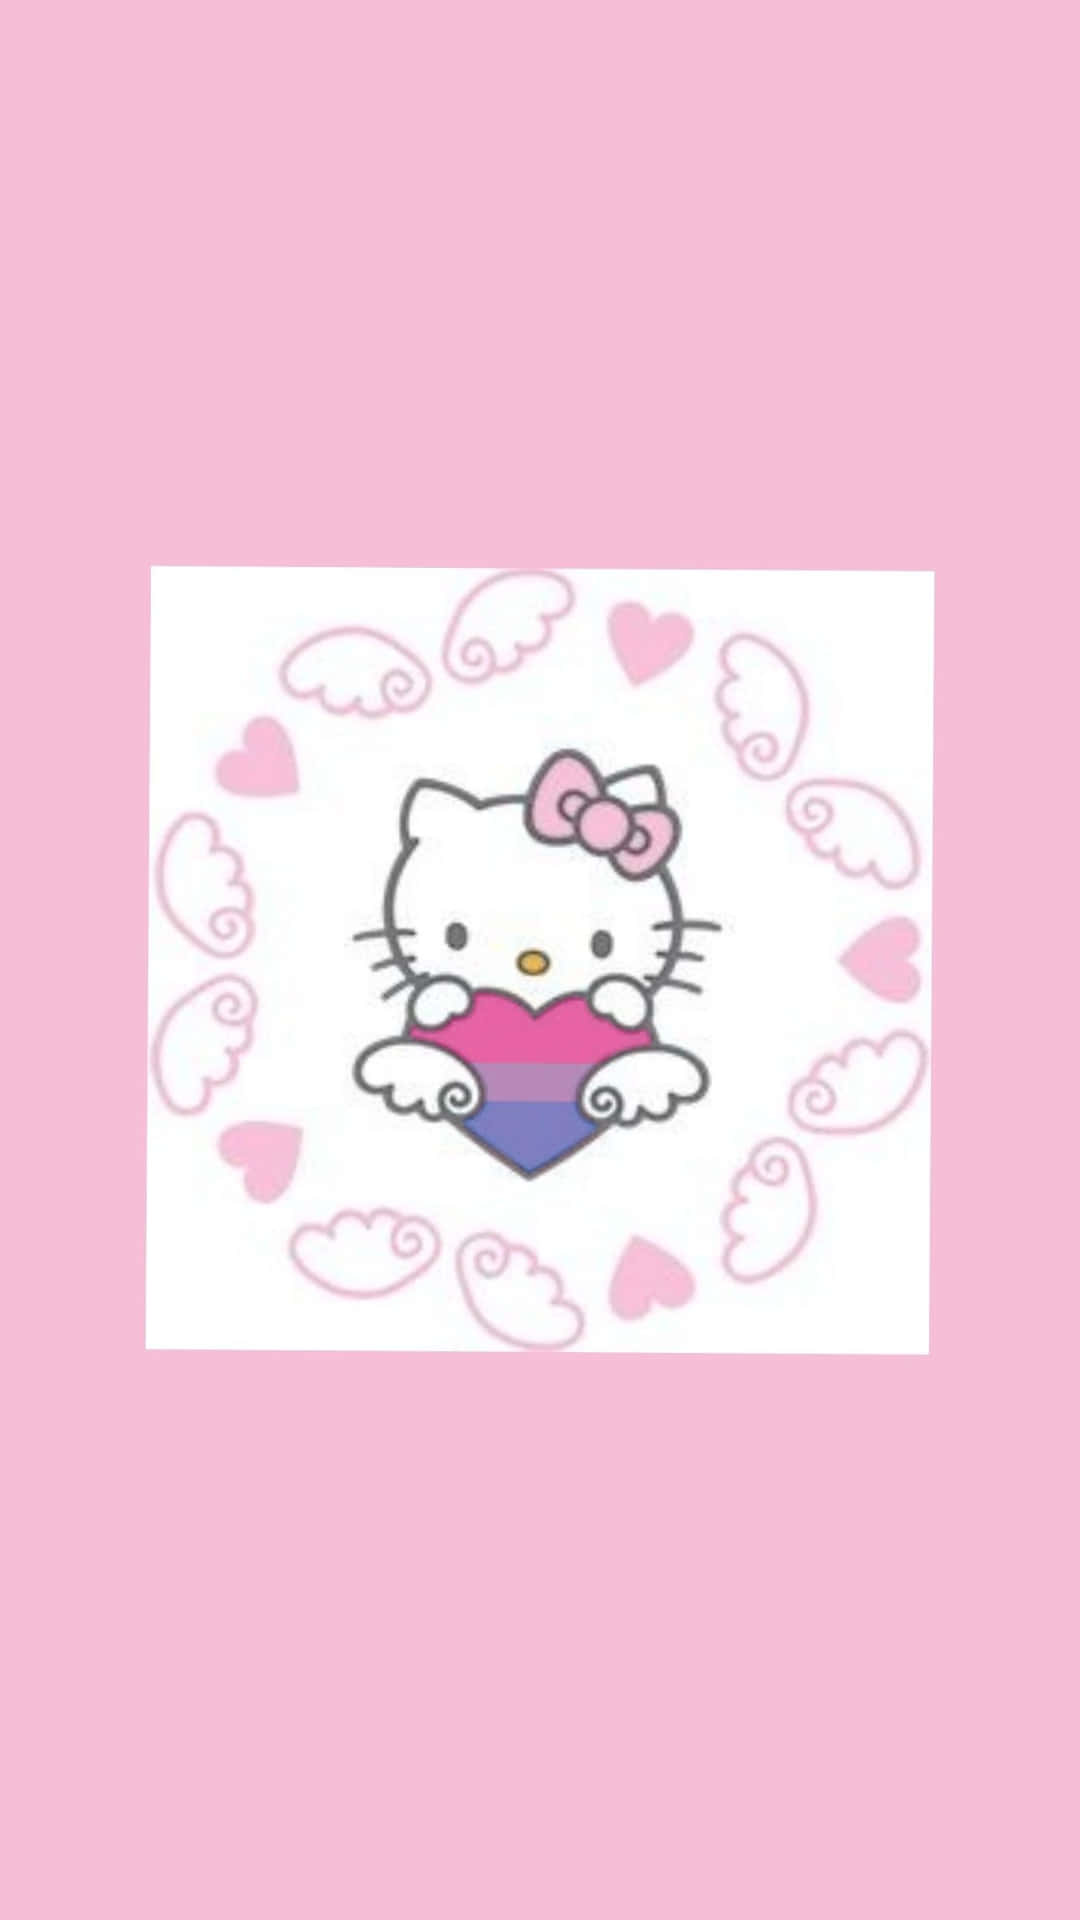 Bisexual Themed Hello Kitty Pfp Wallpaper